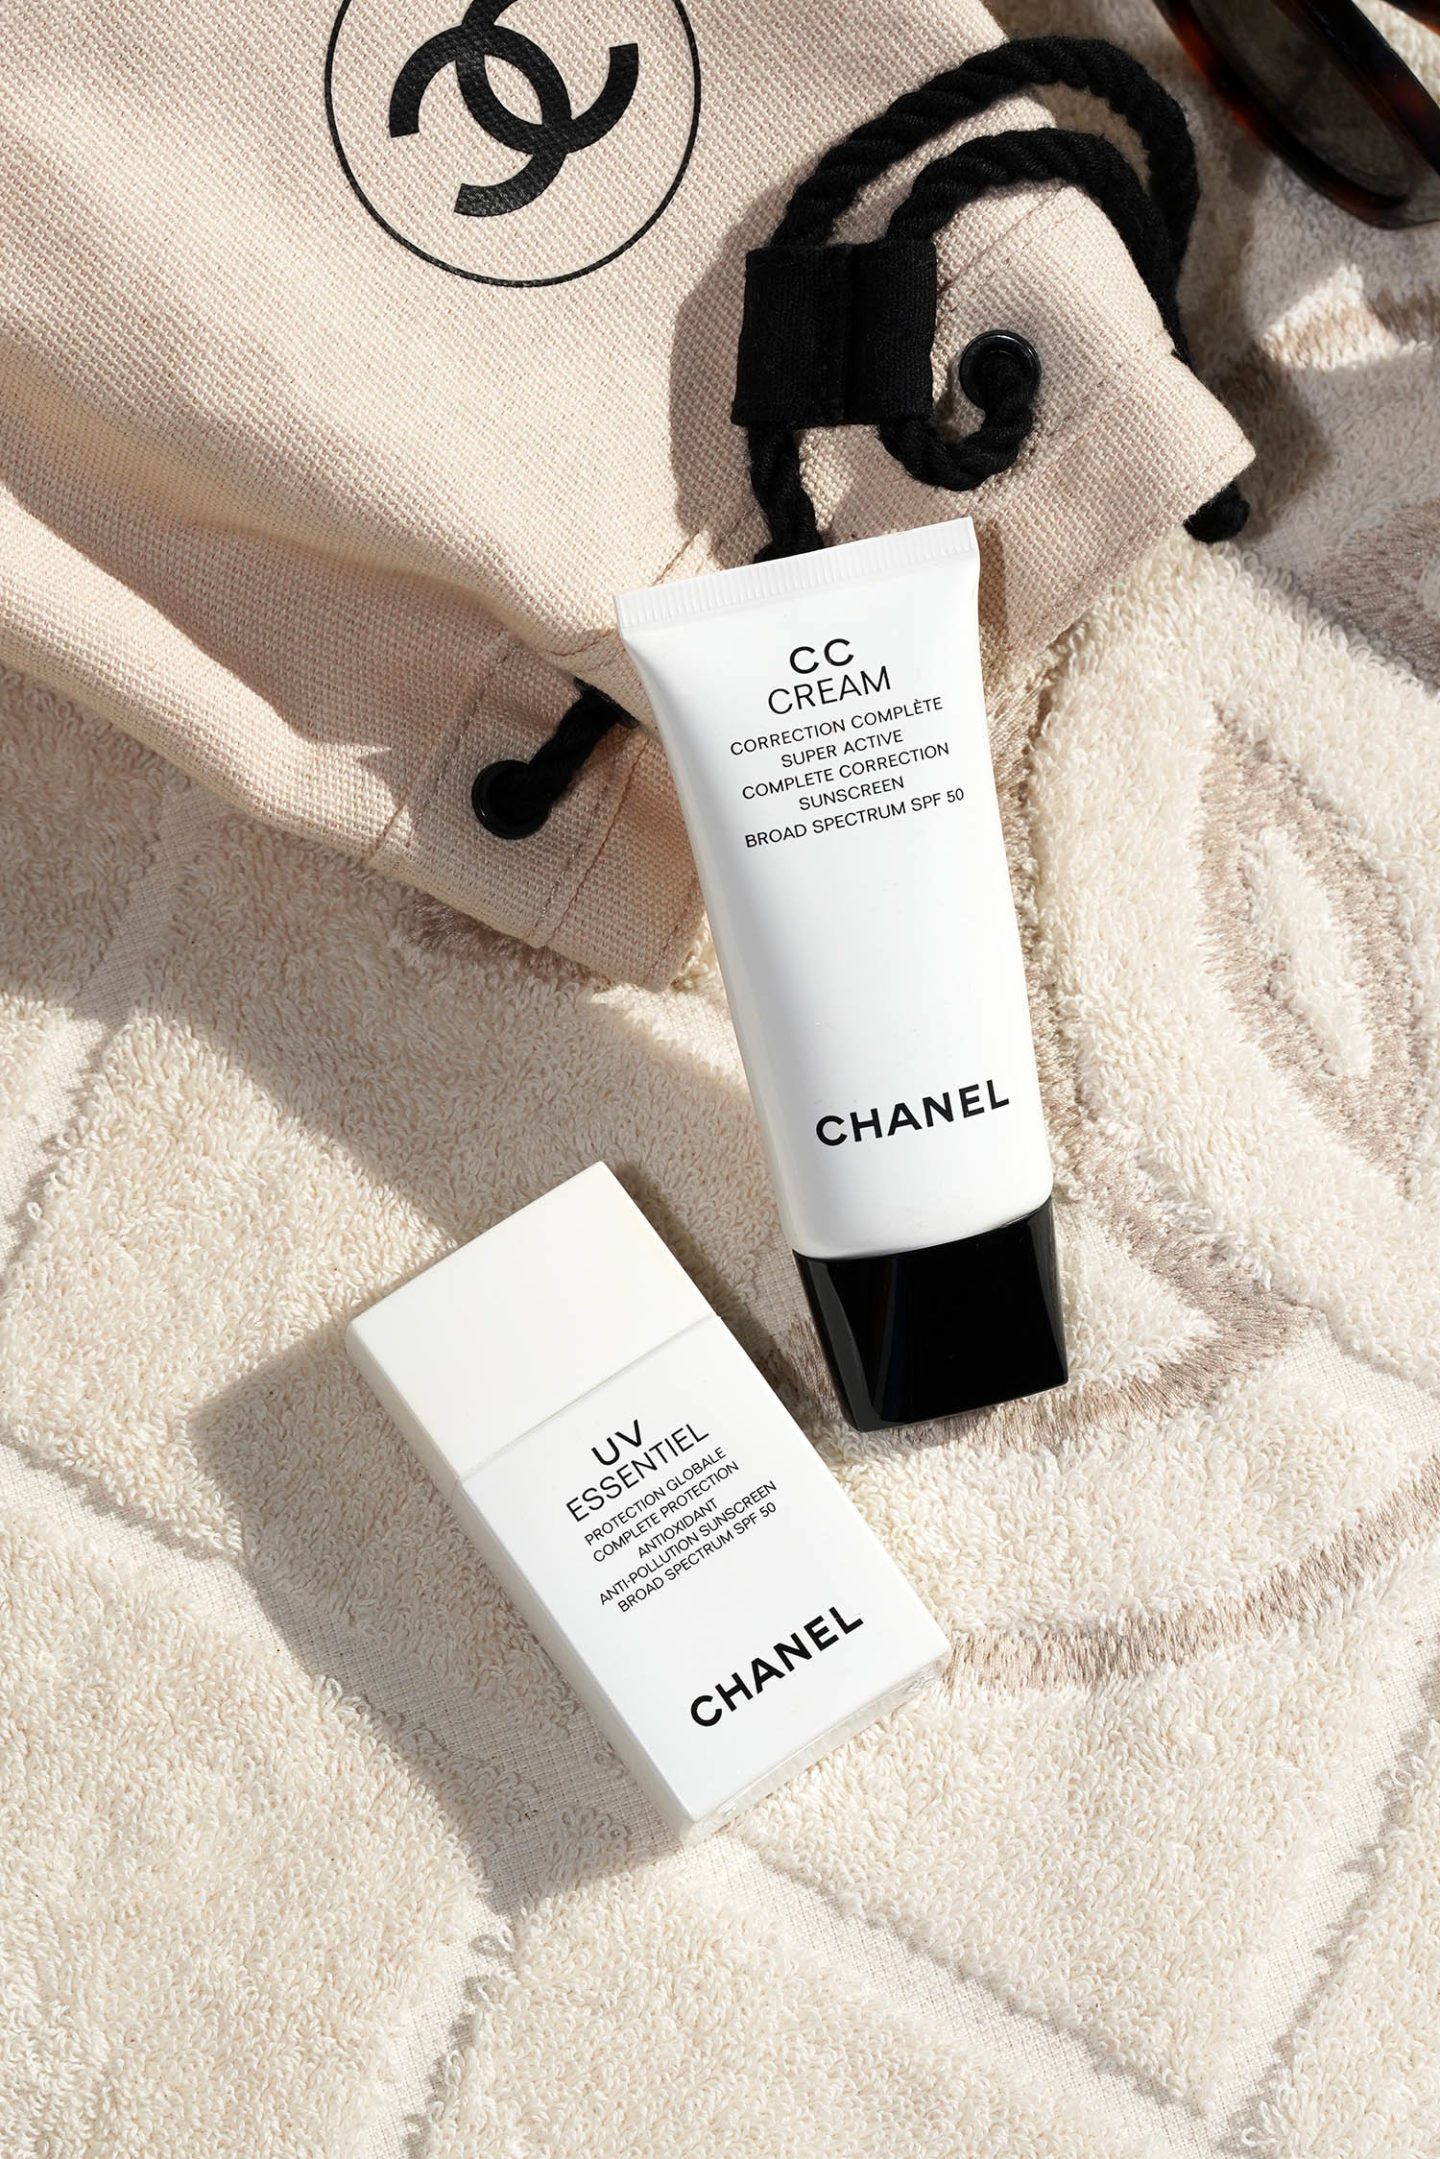 Chanel UV Essential and CC Cream